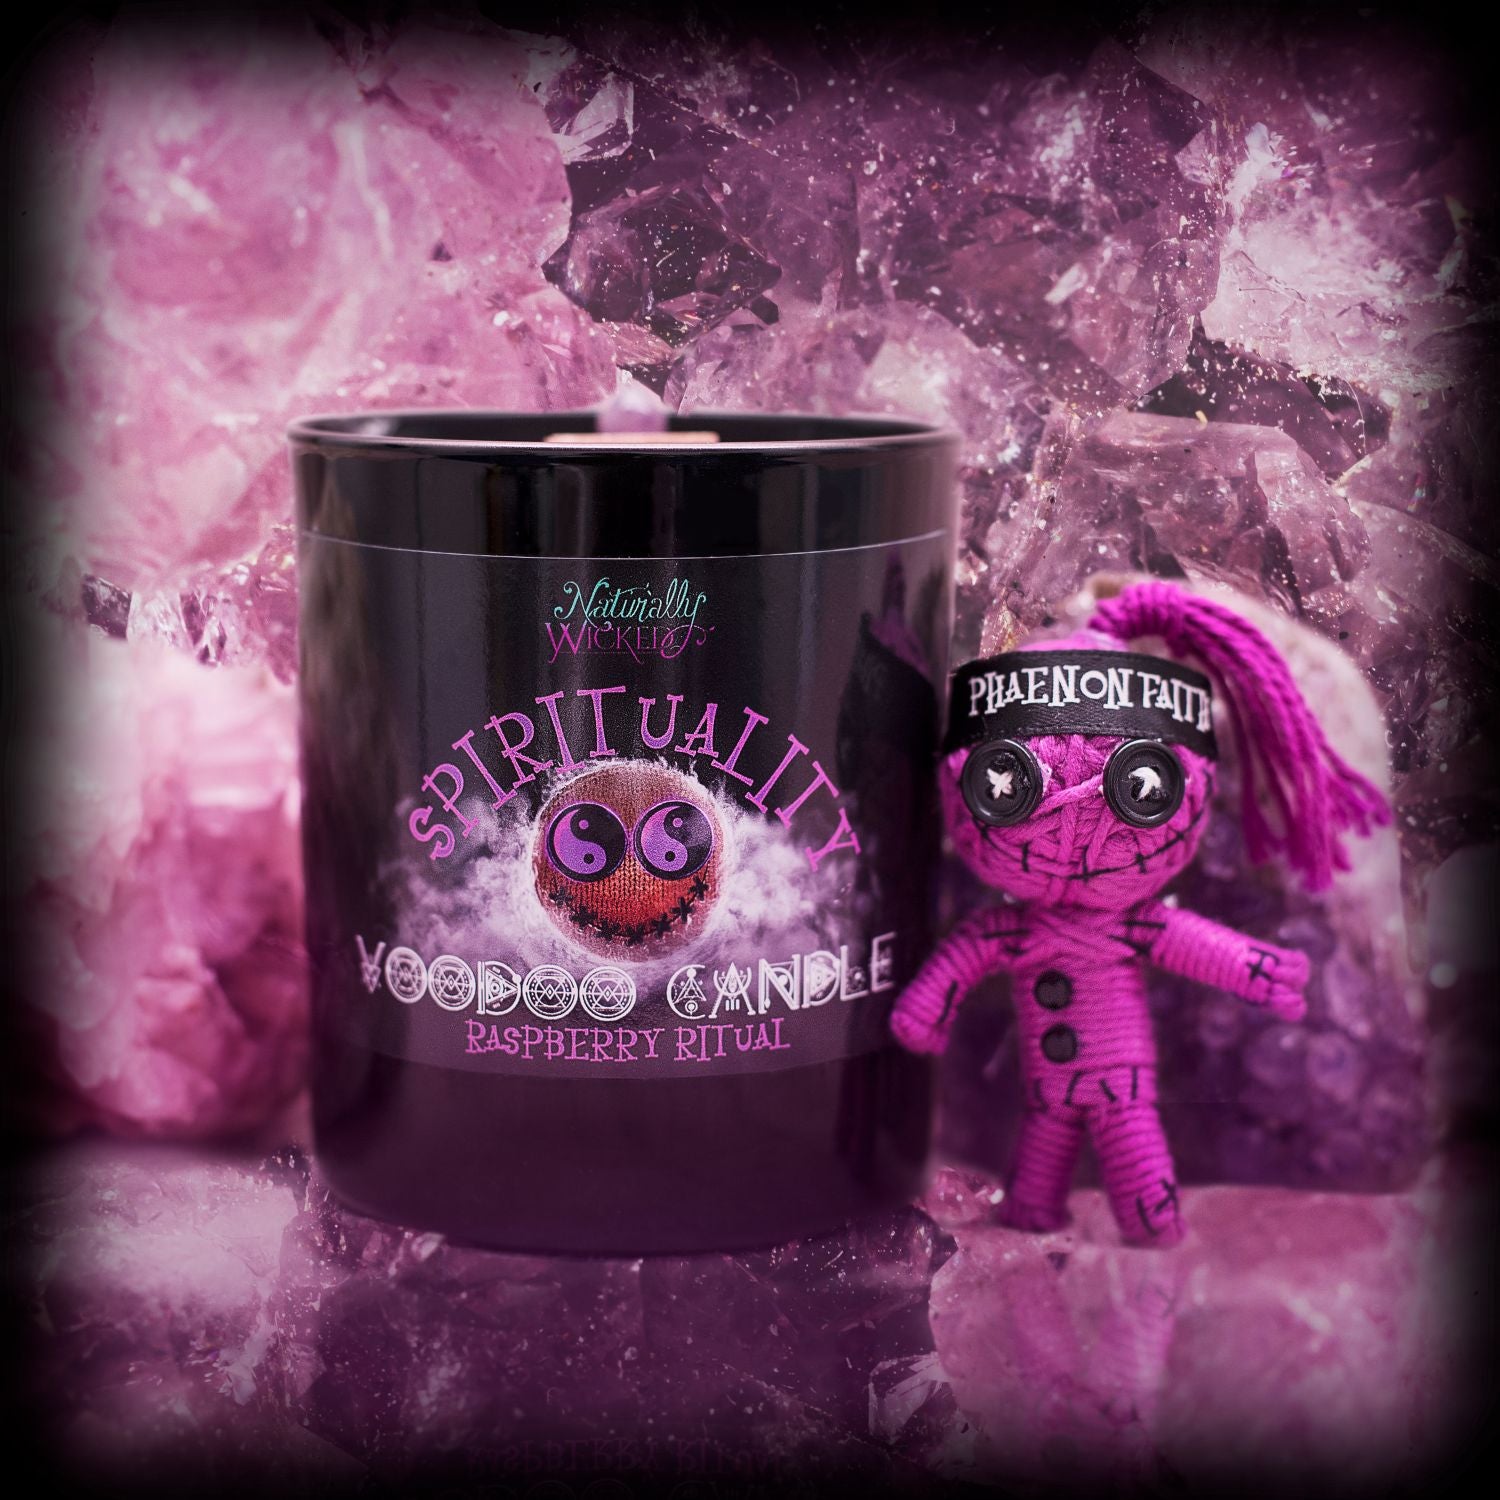 Naturally Wicked Voodoo Crystal Spirituality Candle Alongside Purple Spiritual Voodoo Doll; Phaenon Faith